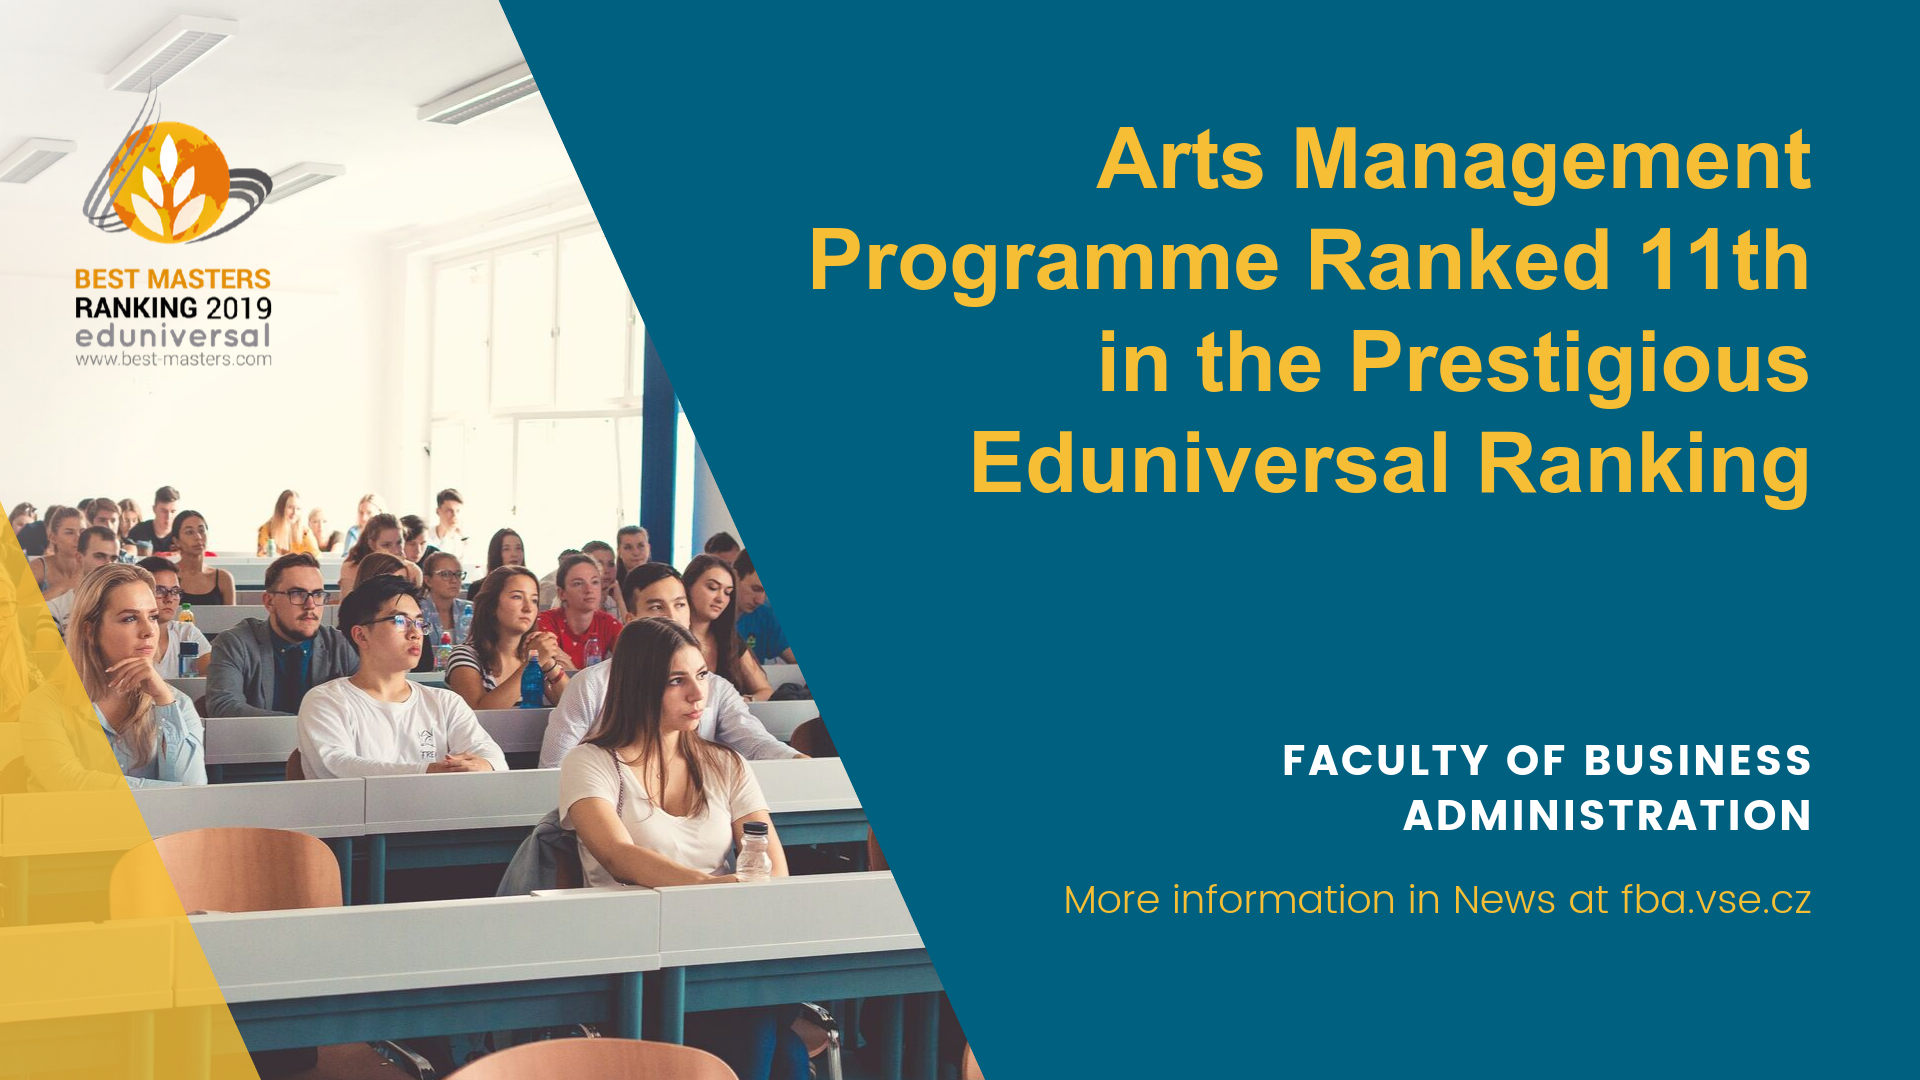 Arts management programme got 11th place in prestigious Eduniversal ranking